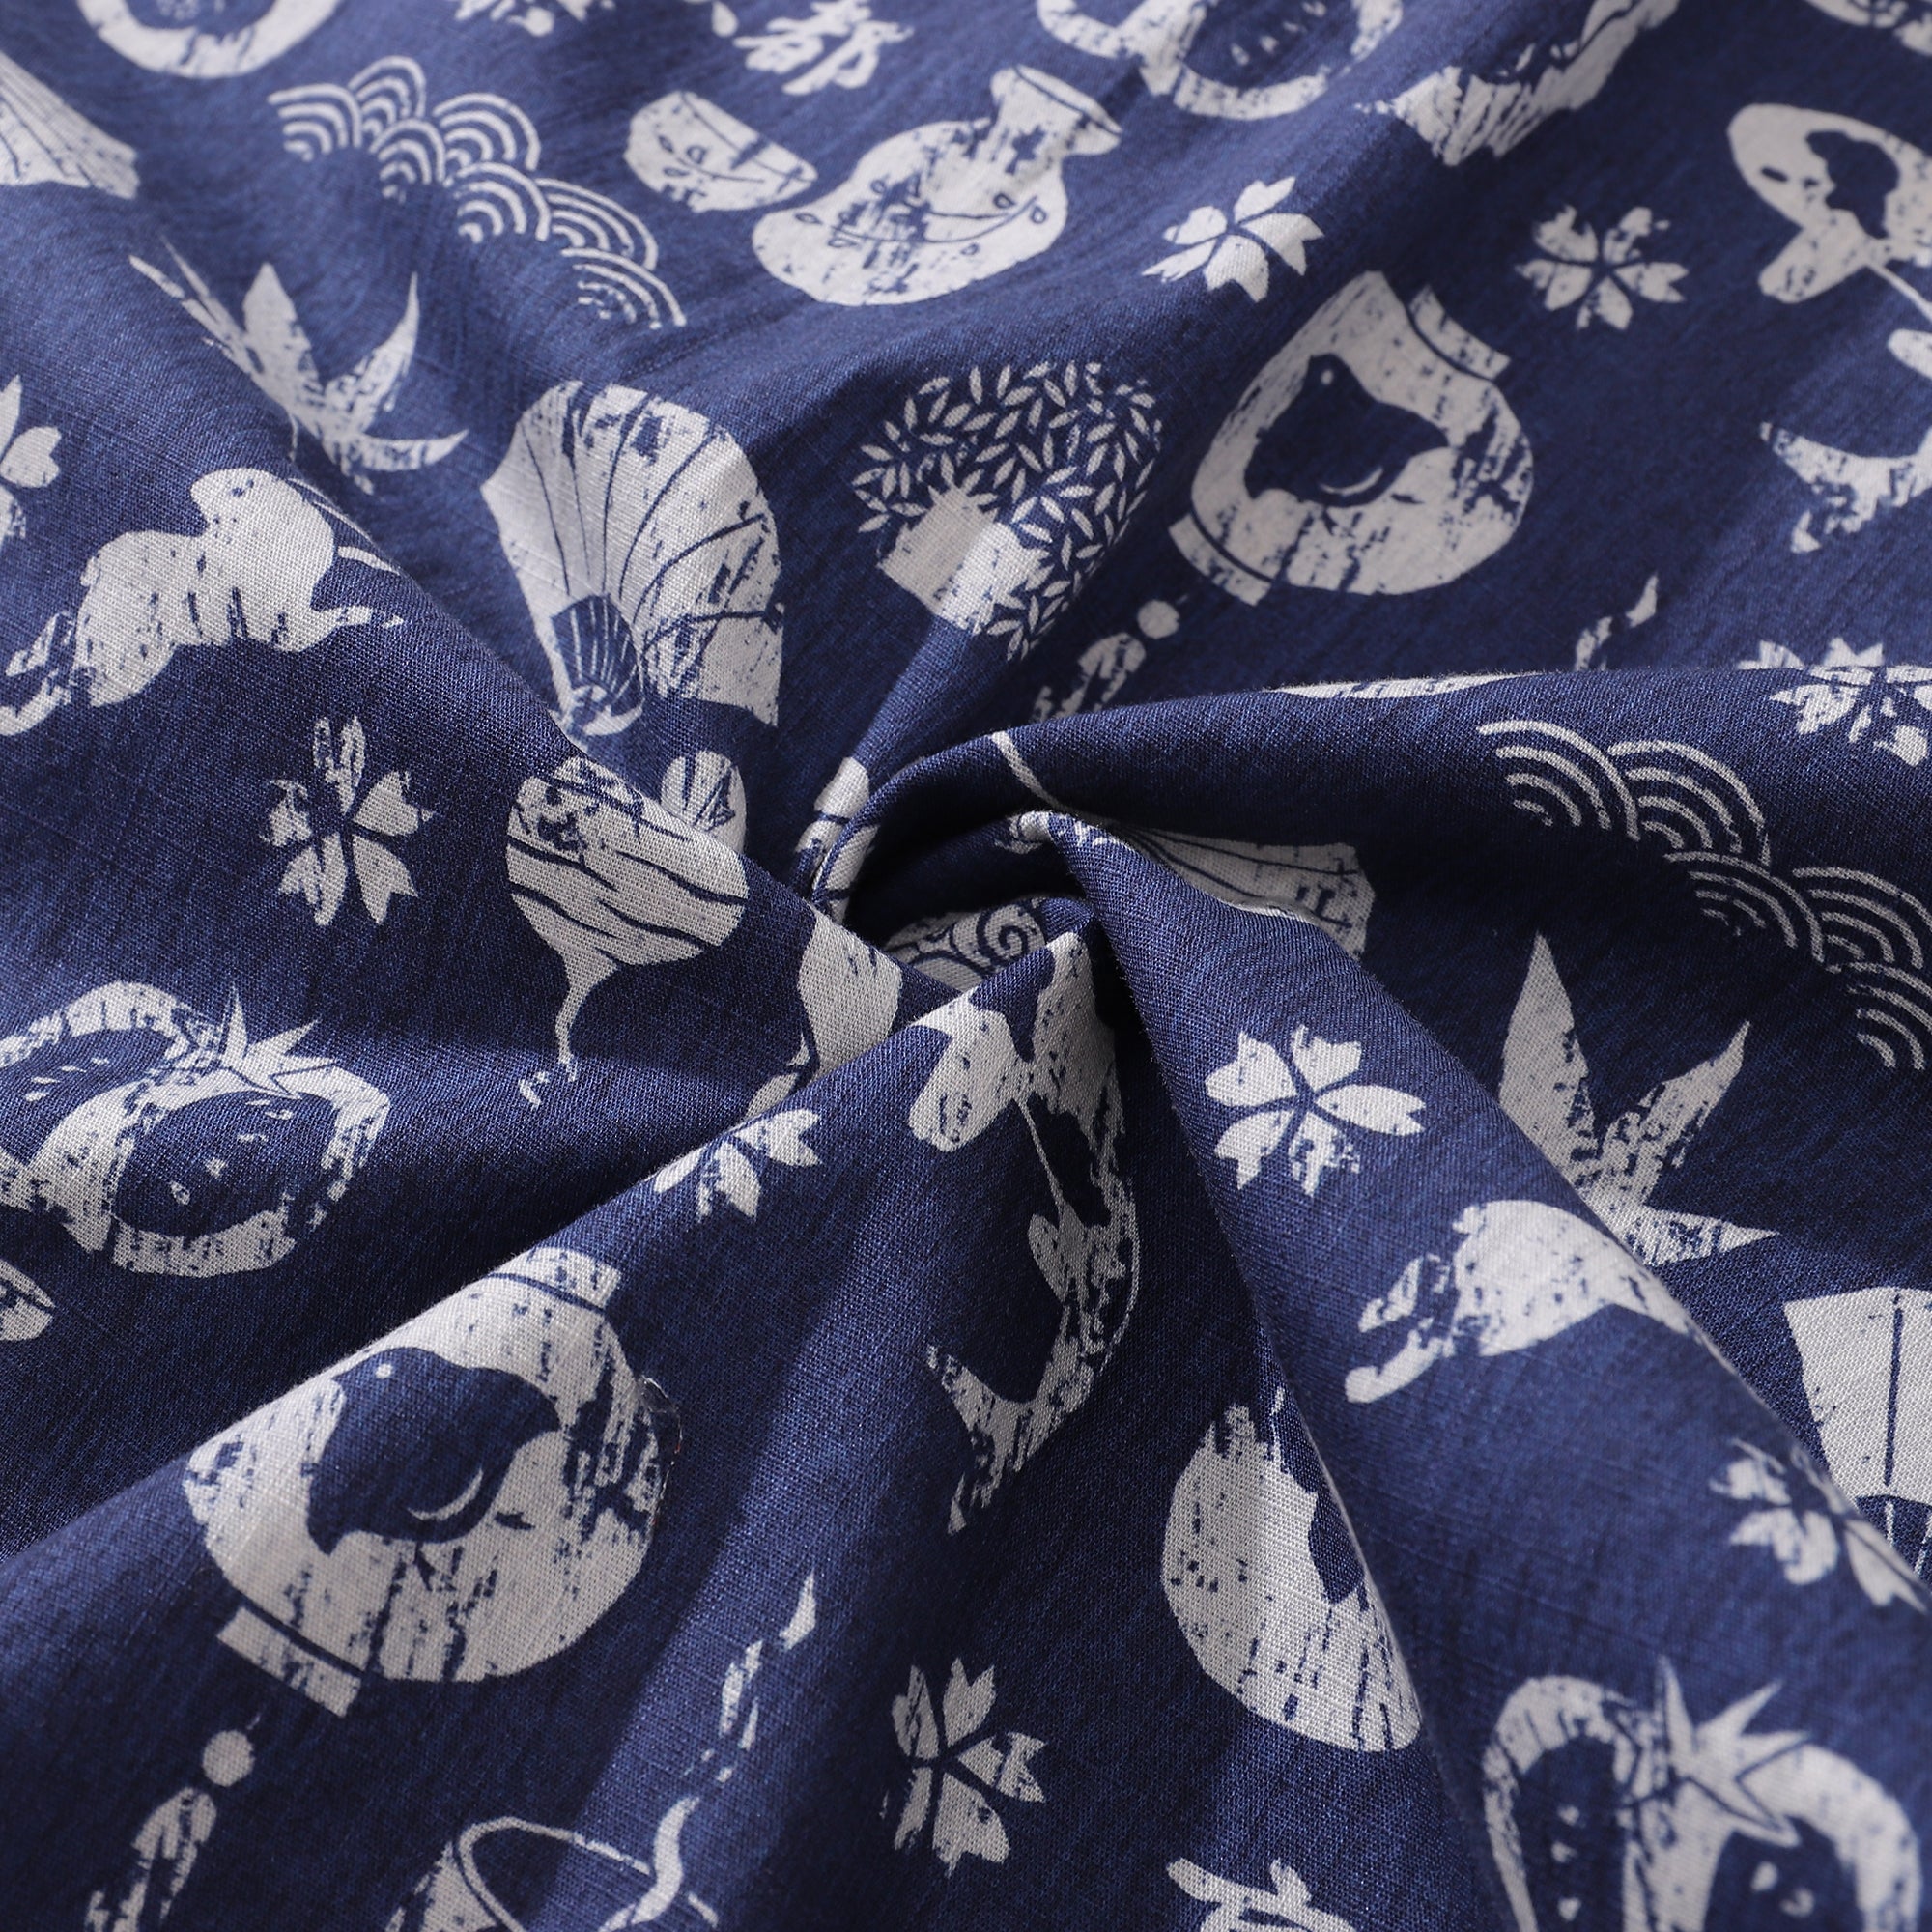 Men's Hawaiian Shirt Kyoto Memories By House of Haricot Cotton Button-down Short Sleeve Aloha Shirt